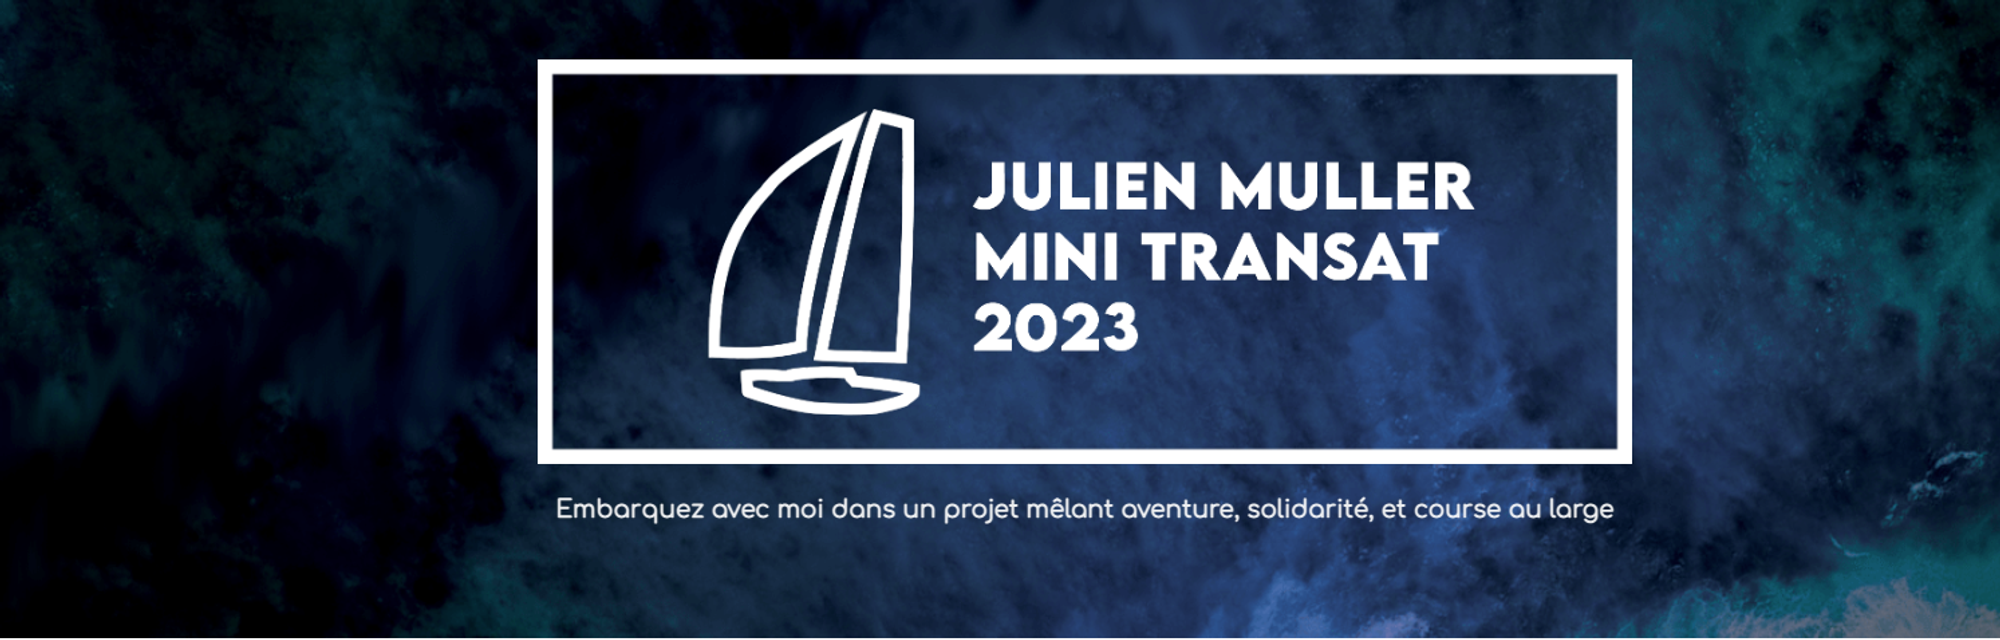 Mini Transat 2023